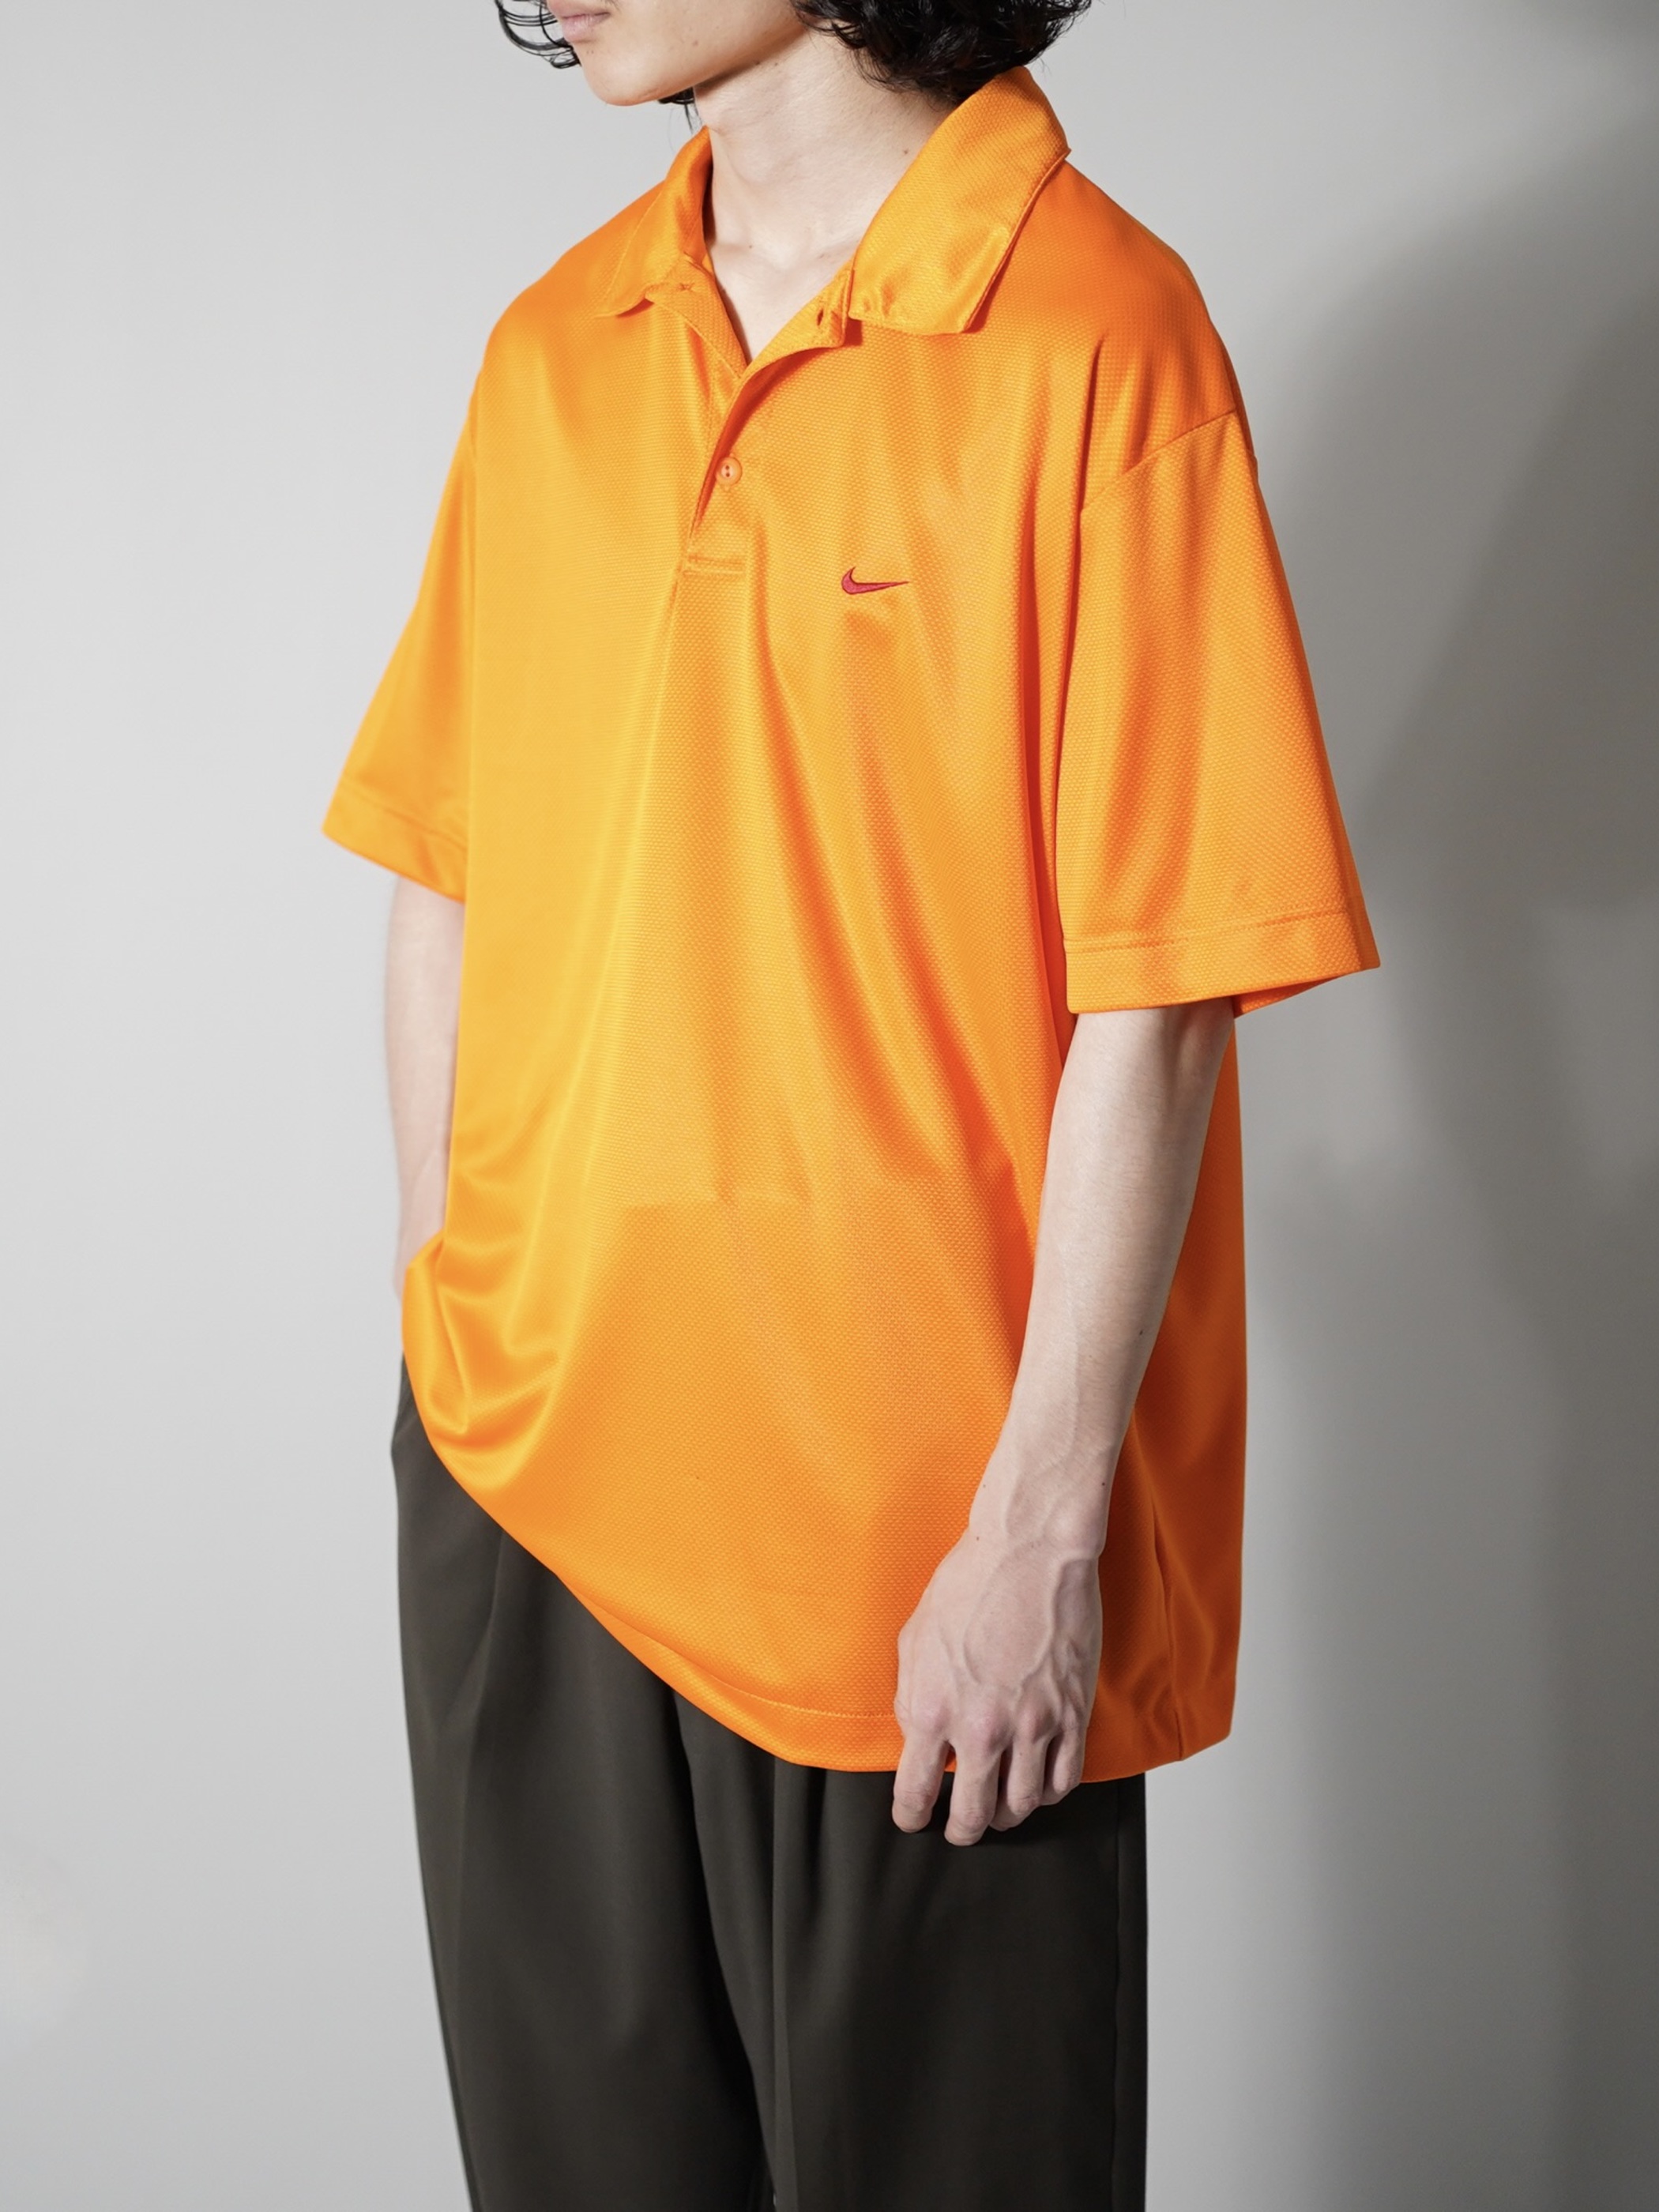 NIKE Polyester Sport Polo shirts